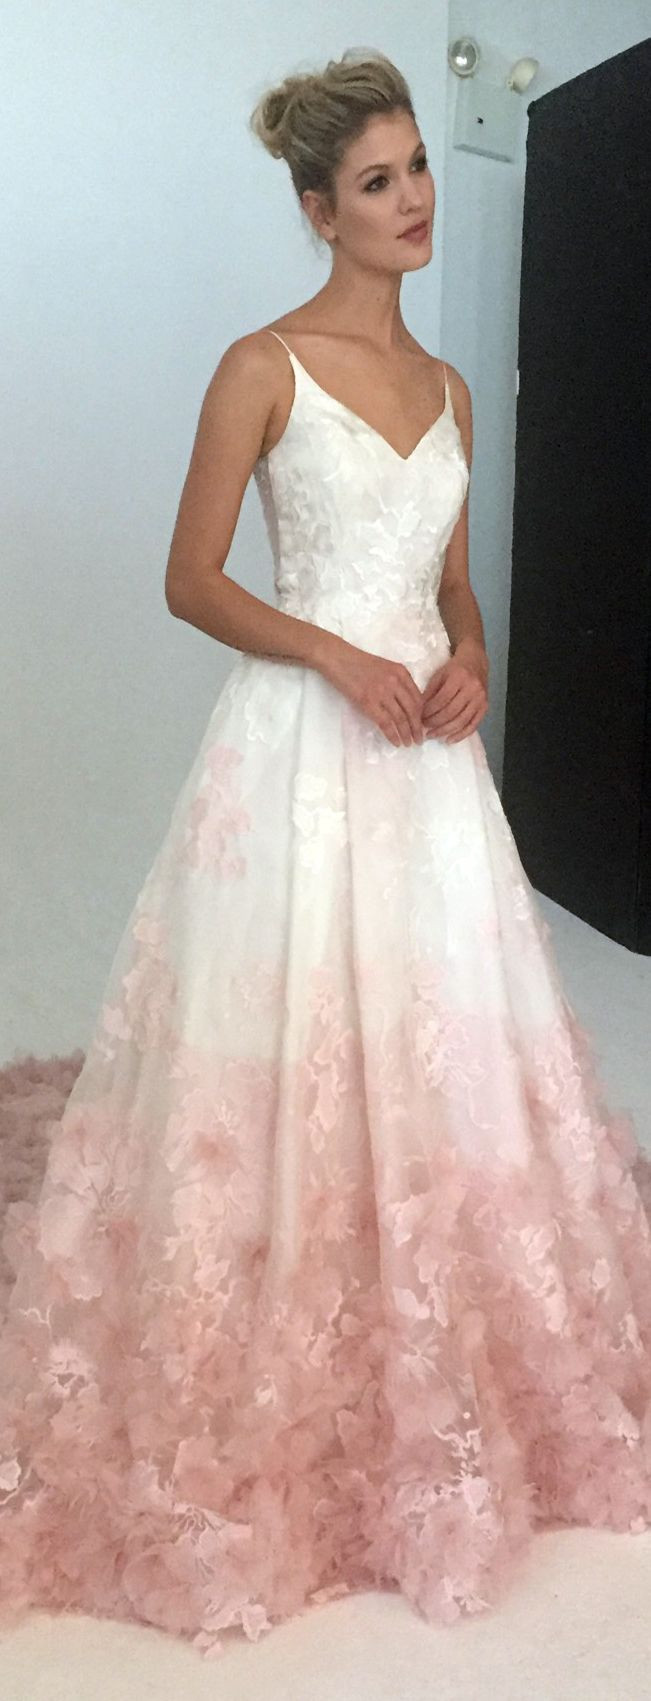 Blush Colored Wedding Dress
 Willow